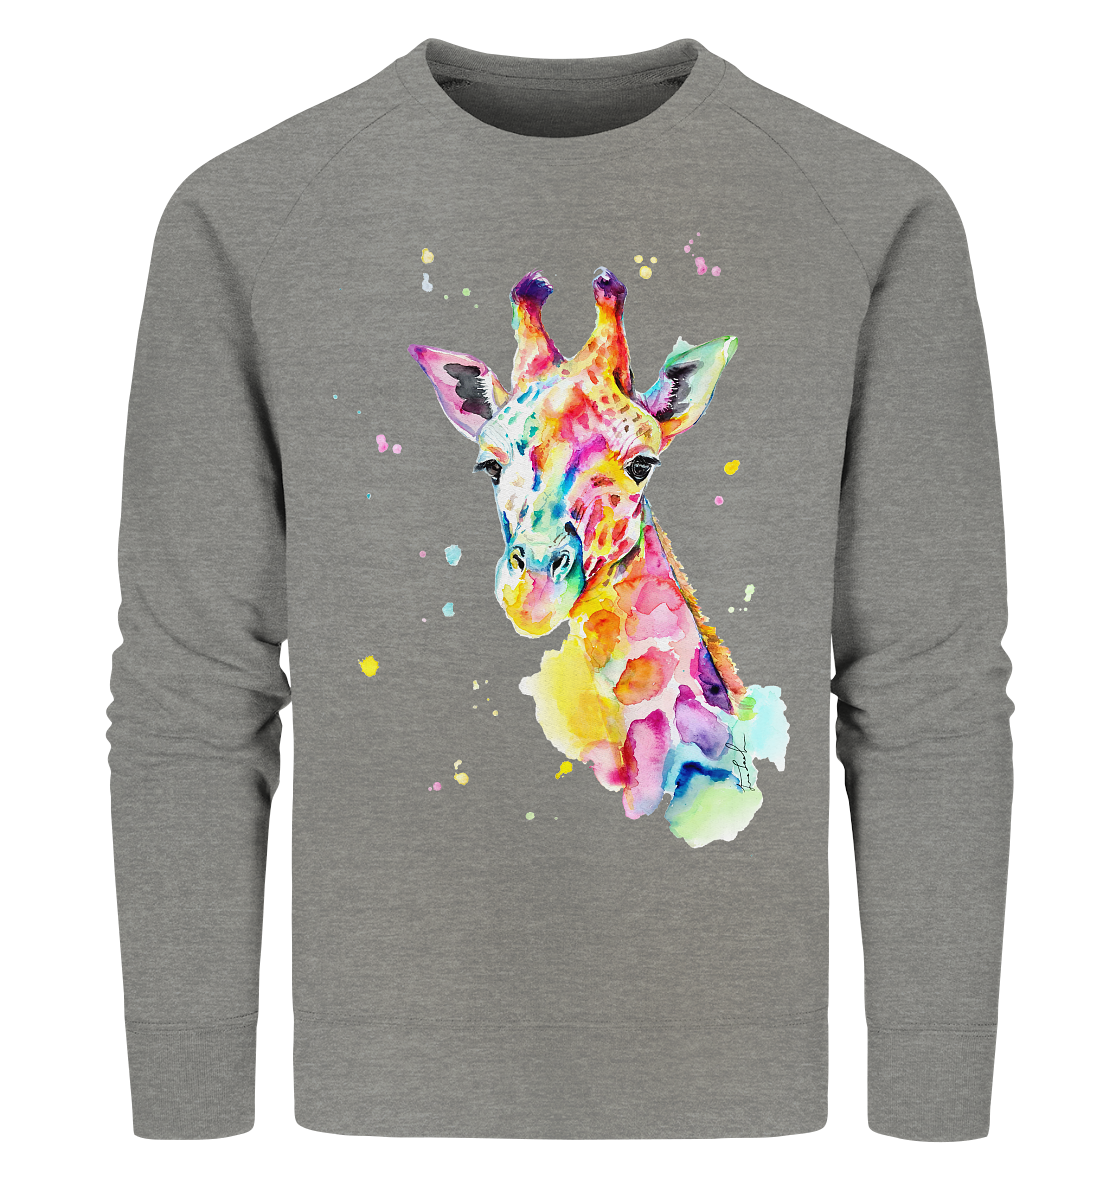 Bunte Giraffe - Organic Sweatshirt